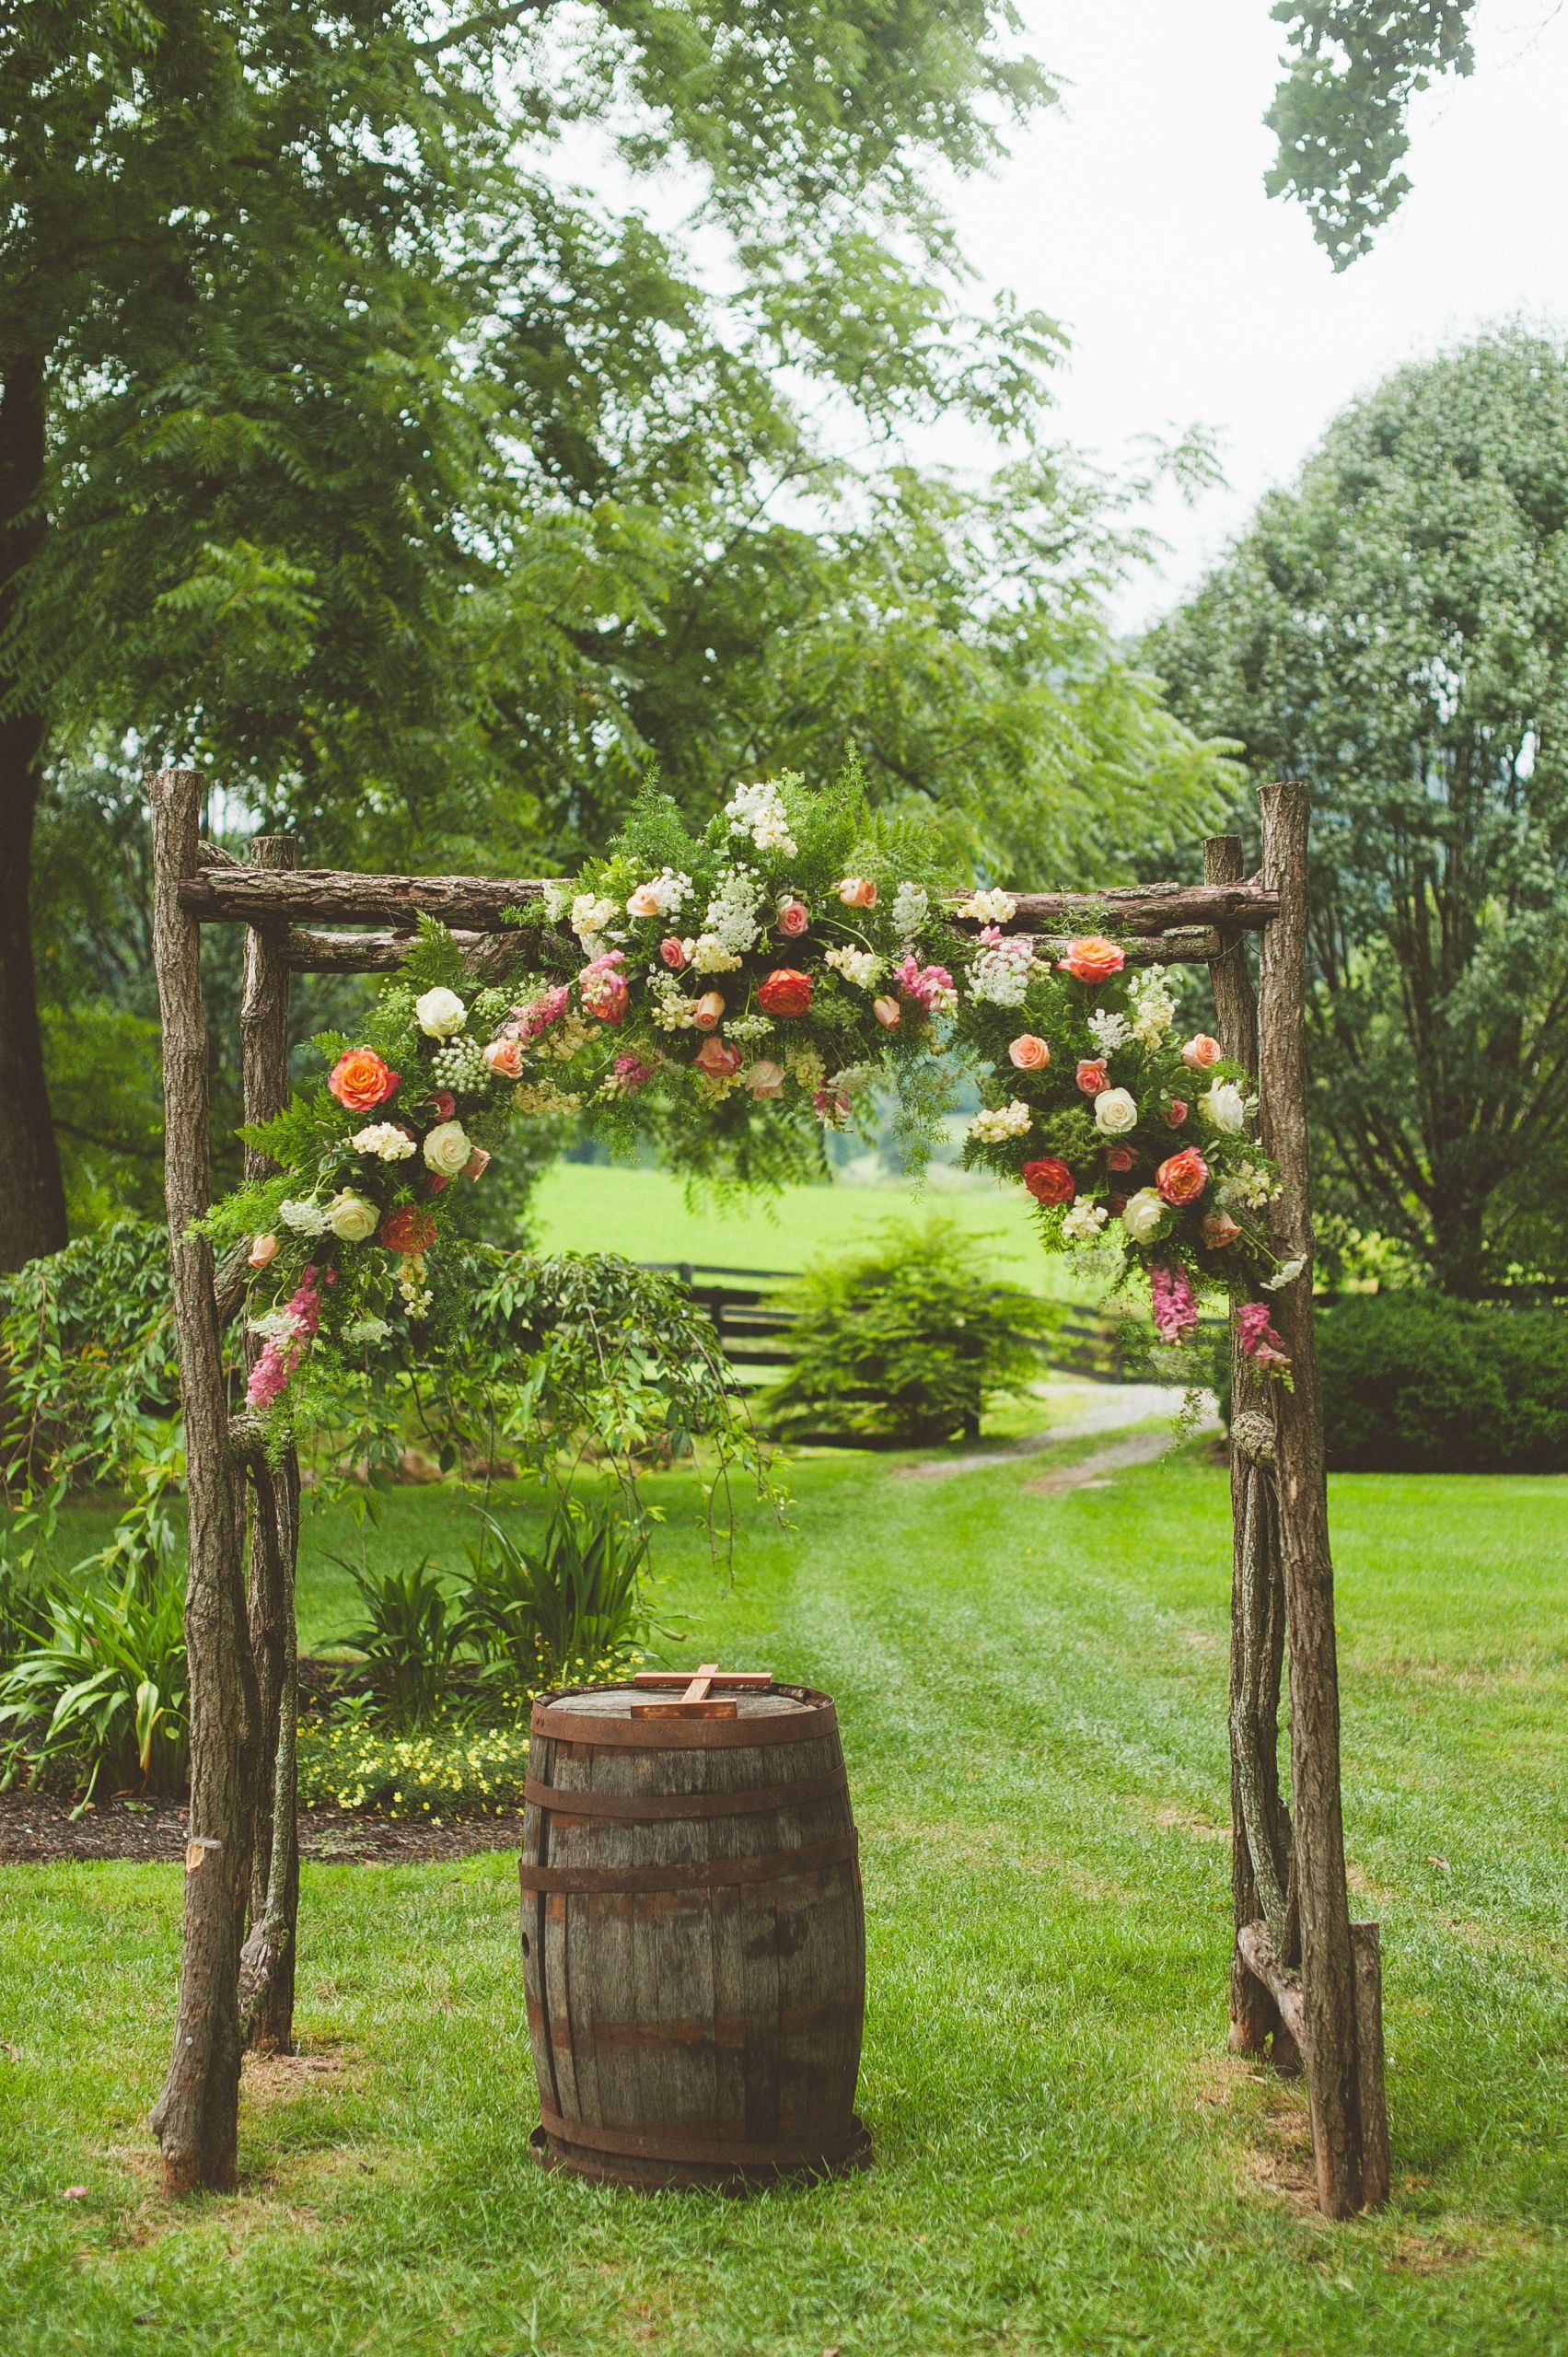 DIY Wood Wedding Arch
 Wooden Wedding Arch With Coral Flowers